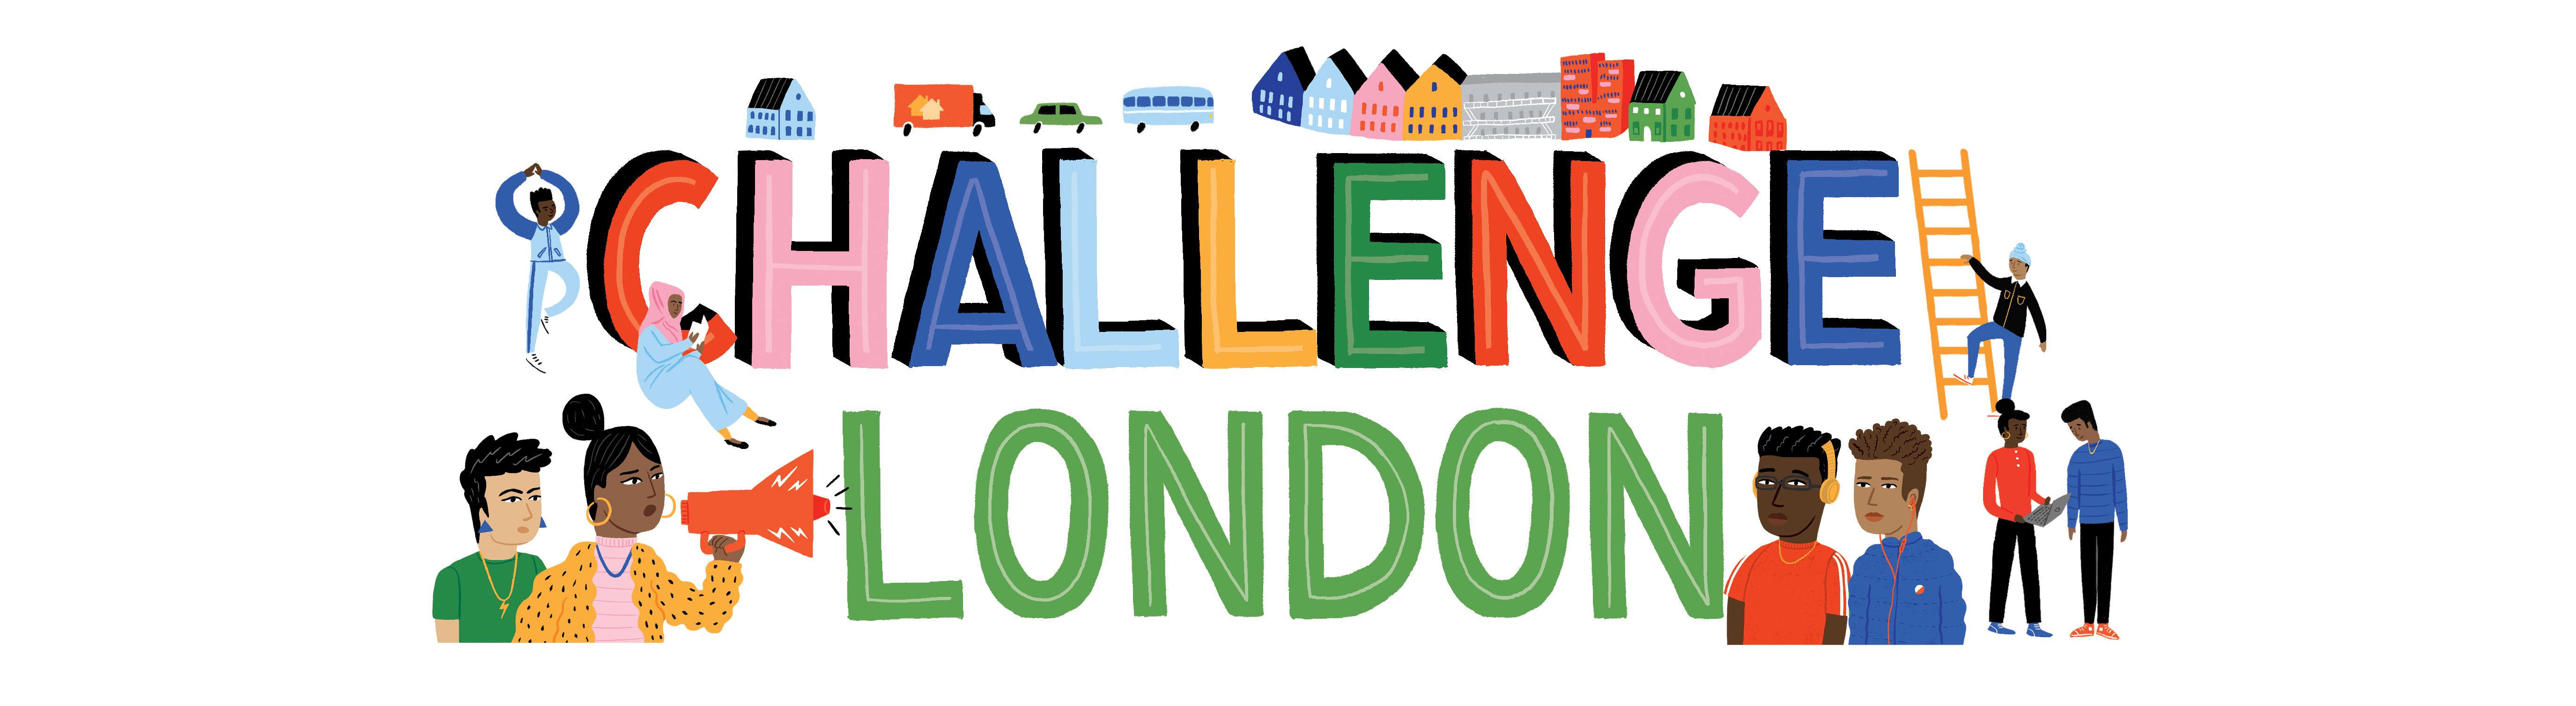 Challenge London.jpg